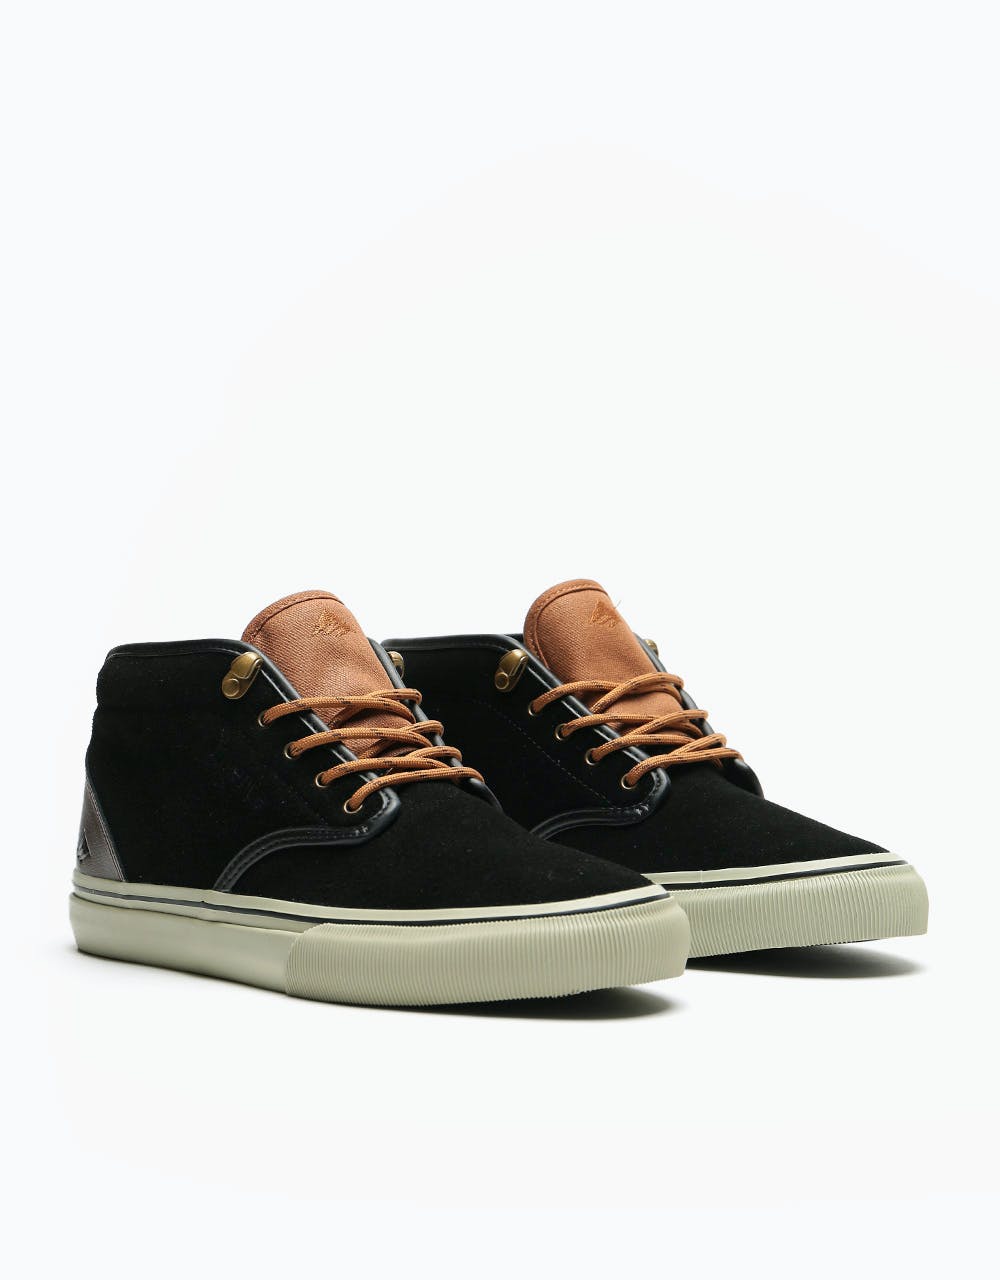 Emerica Wino G6 Mid Skate Shoes - Black/Brown/Grey